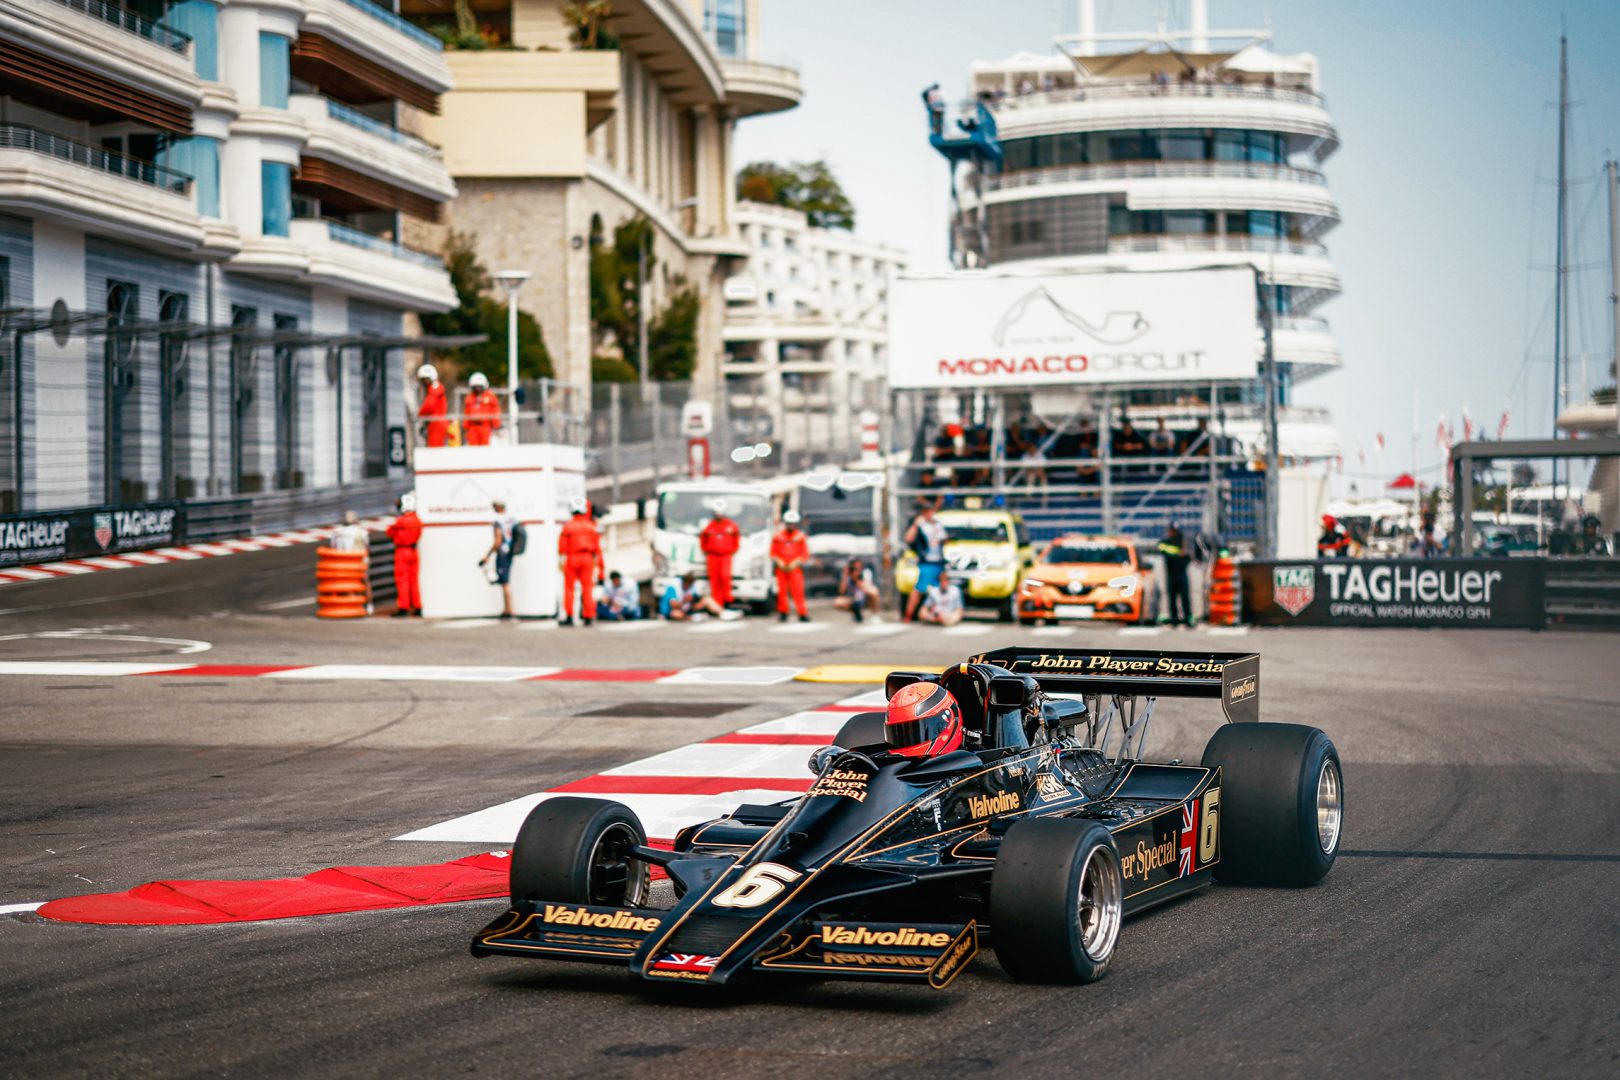 Your all-access pass to Day 1 of the Grand Prix de Monaco Historique